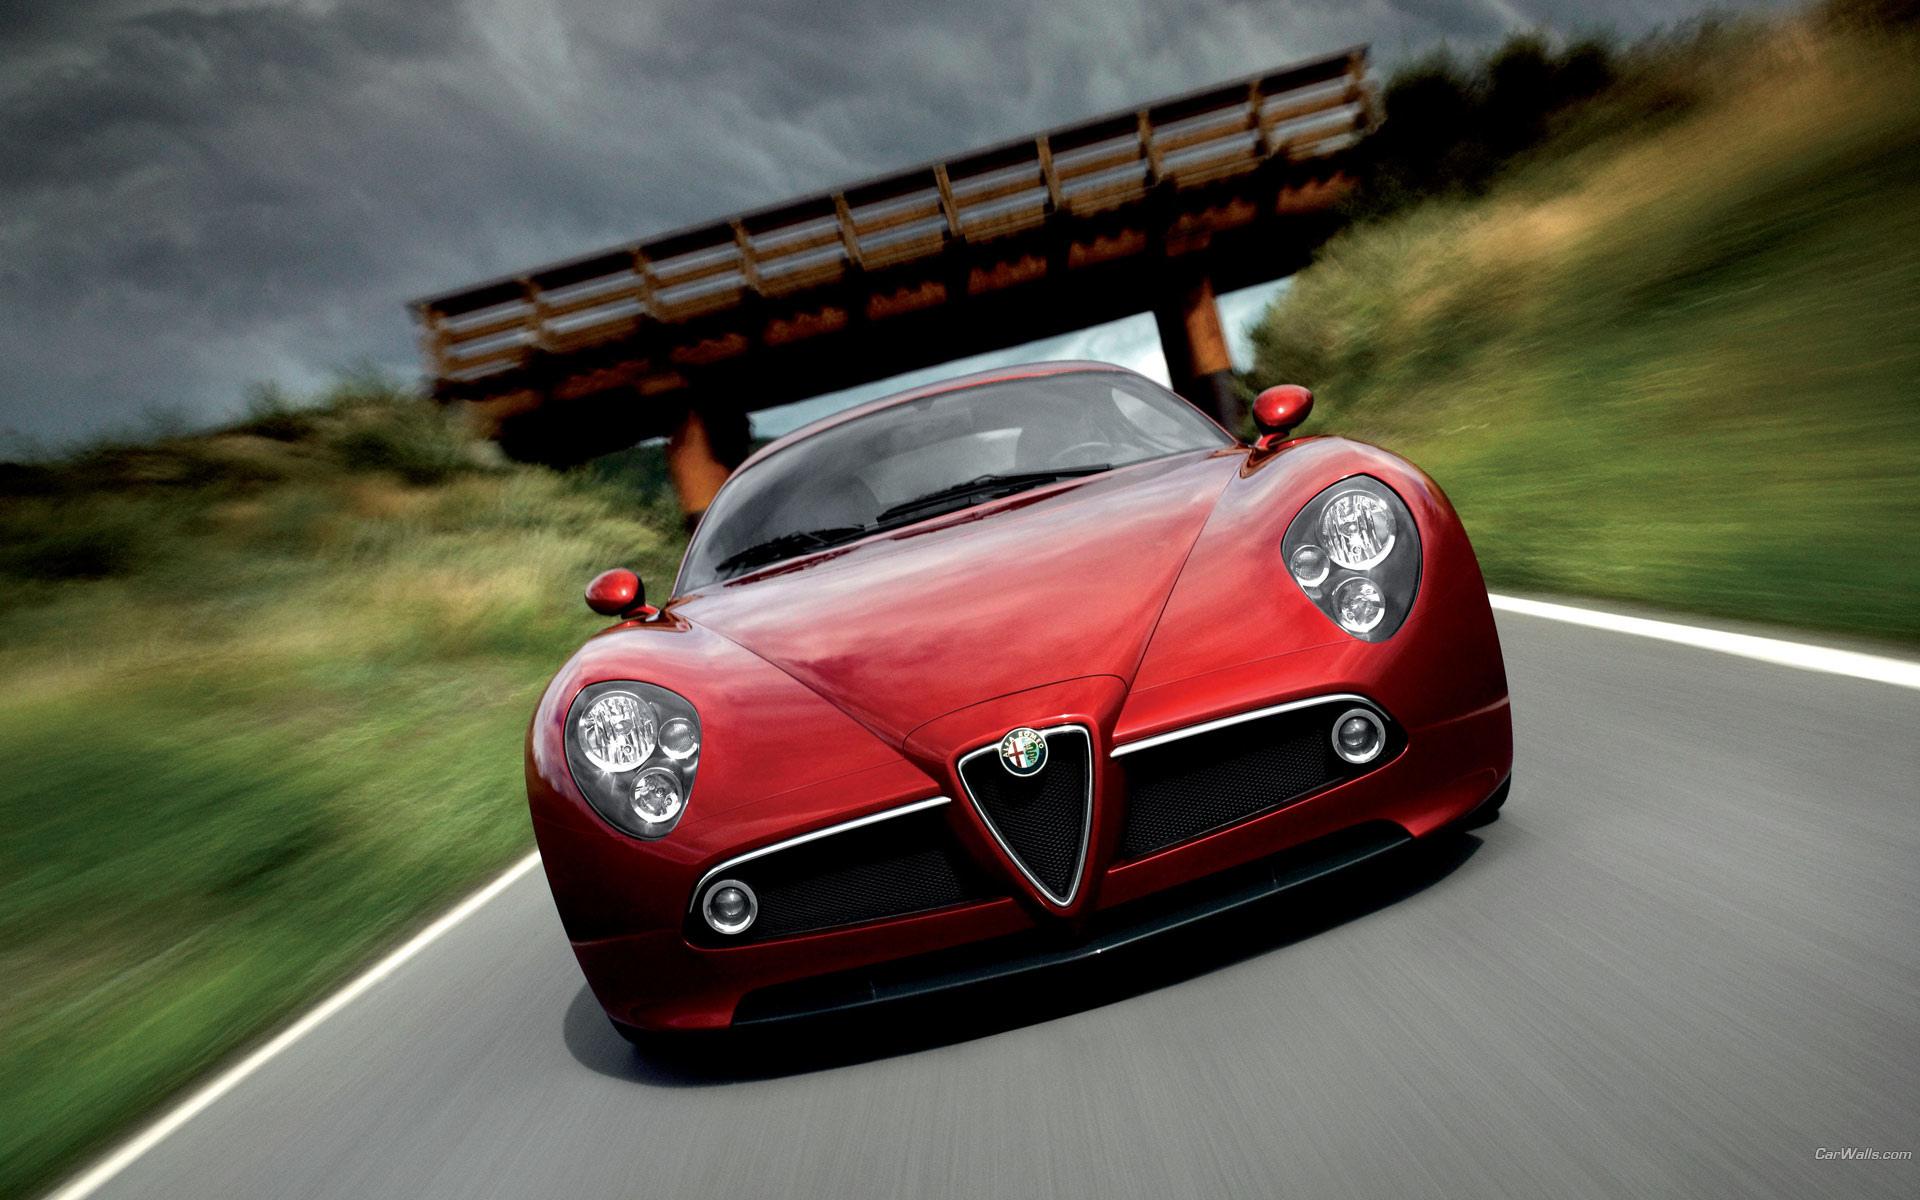 Alfa Romeo 8C Competizione at 2048 x 2048 iPad size wallpapers HD quality